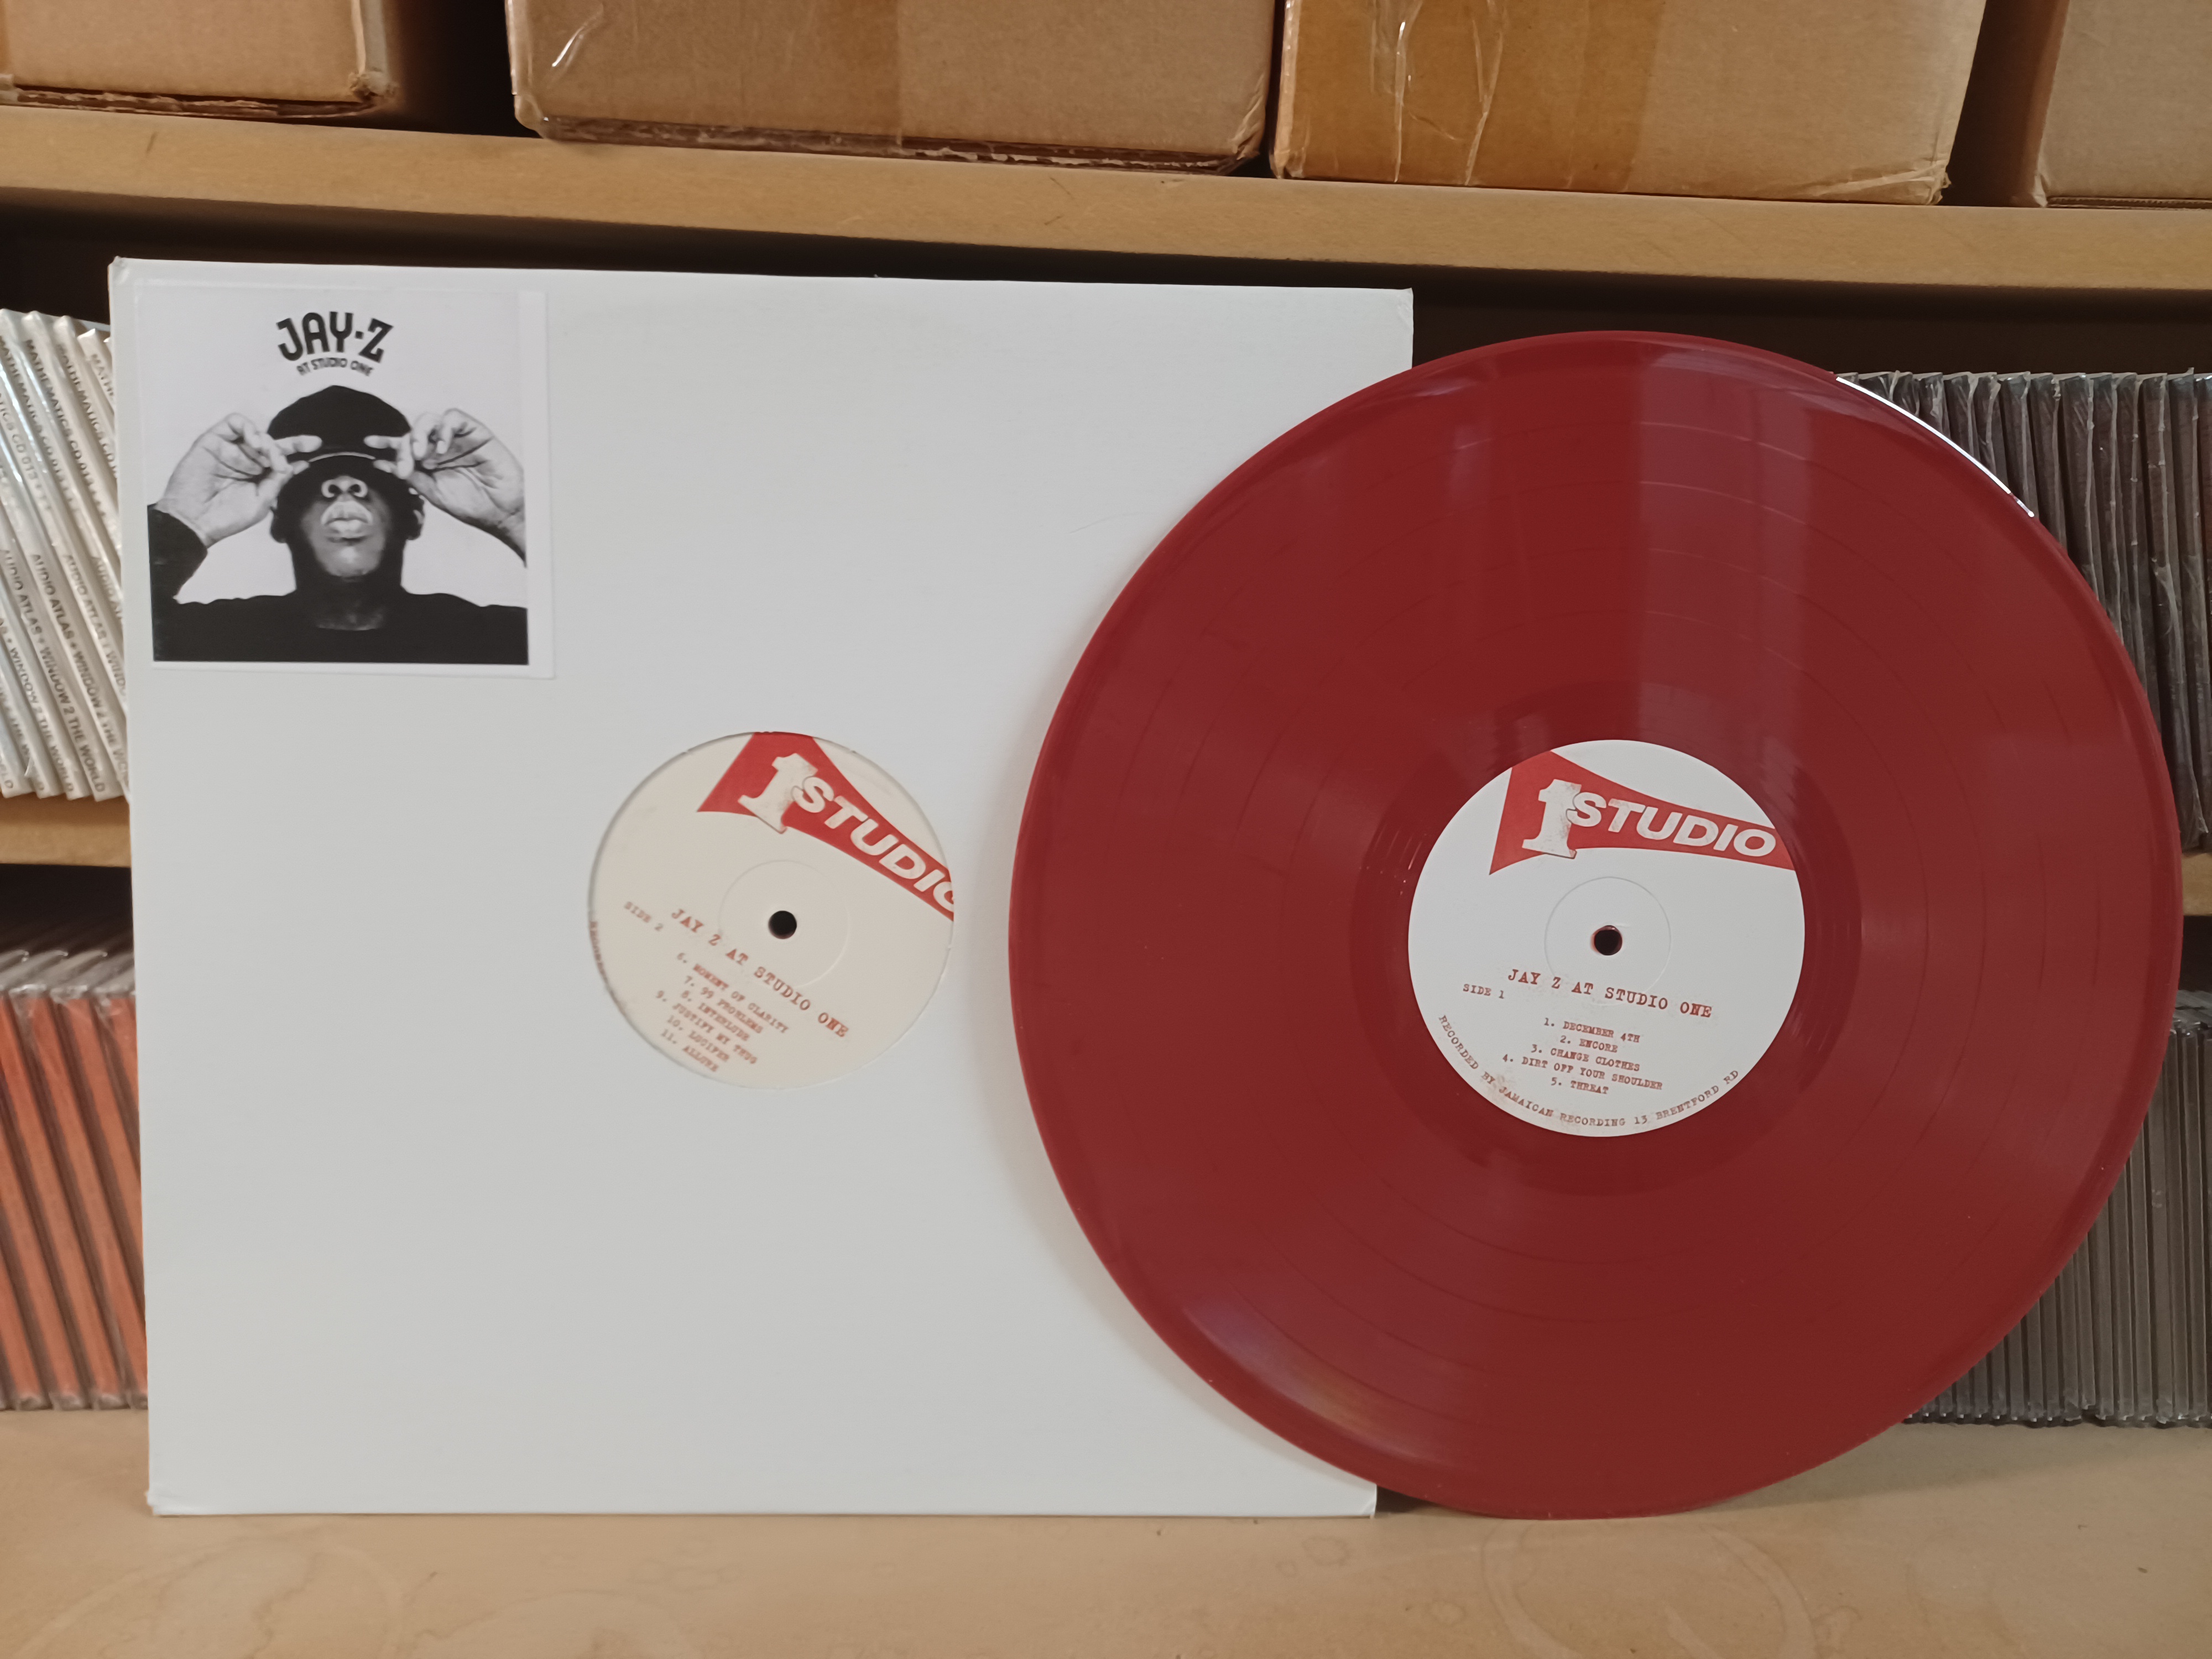 Jay Z at Studio One/REGGAE MASHUP RED LP